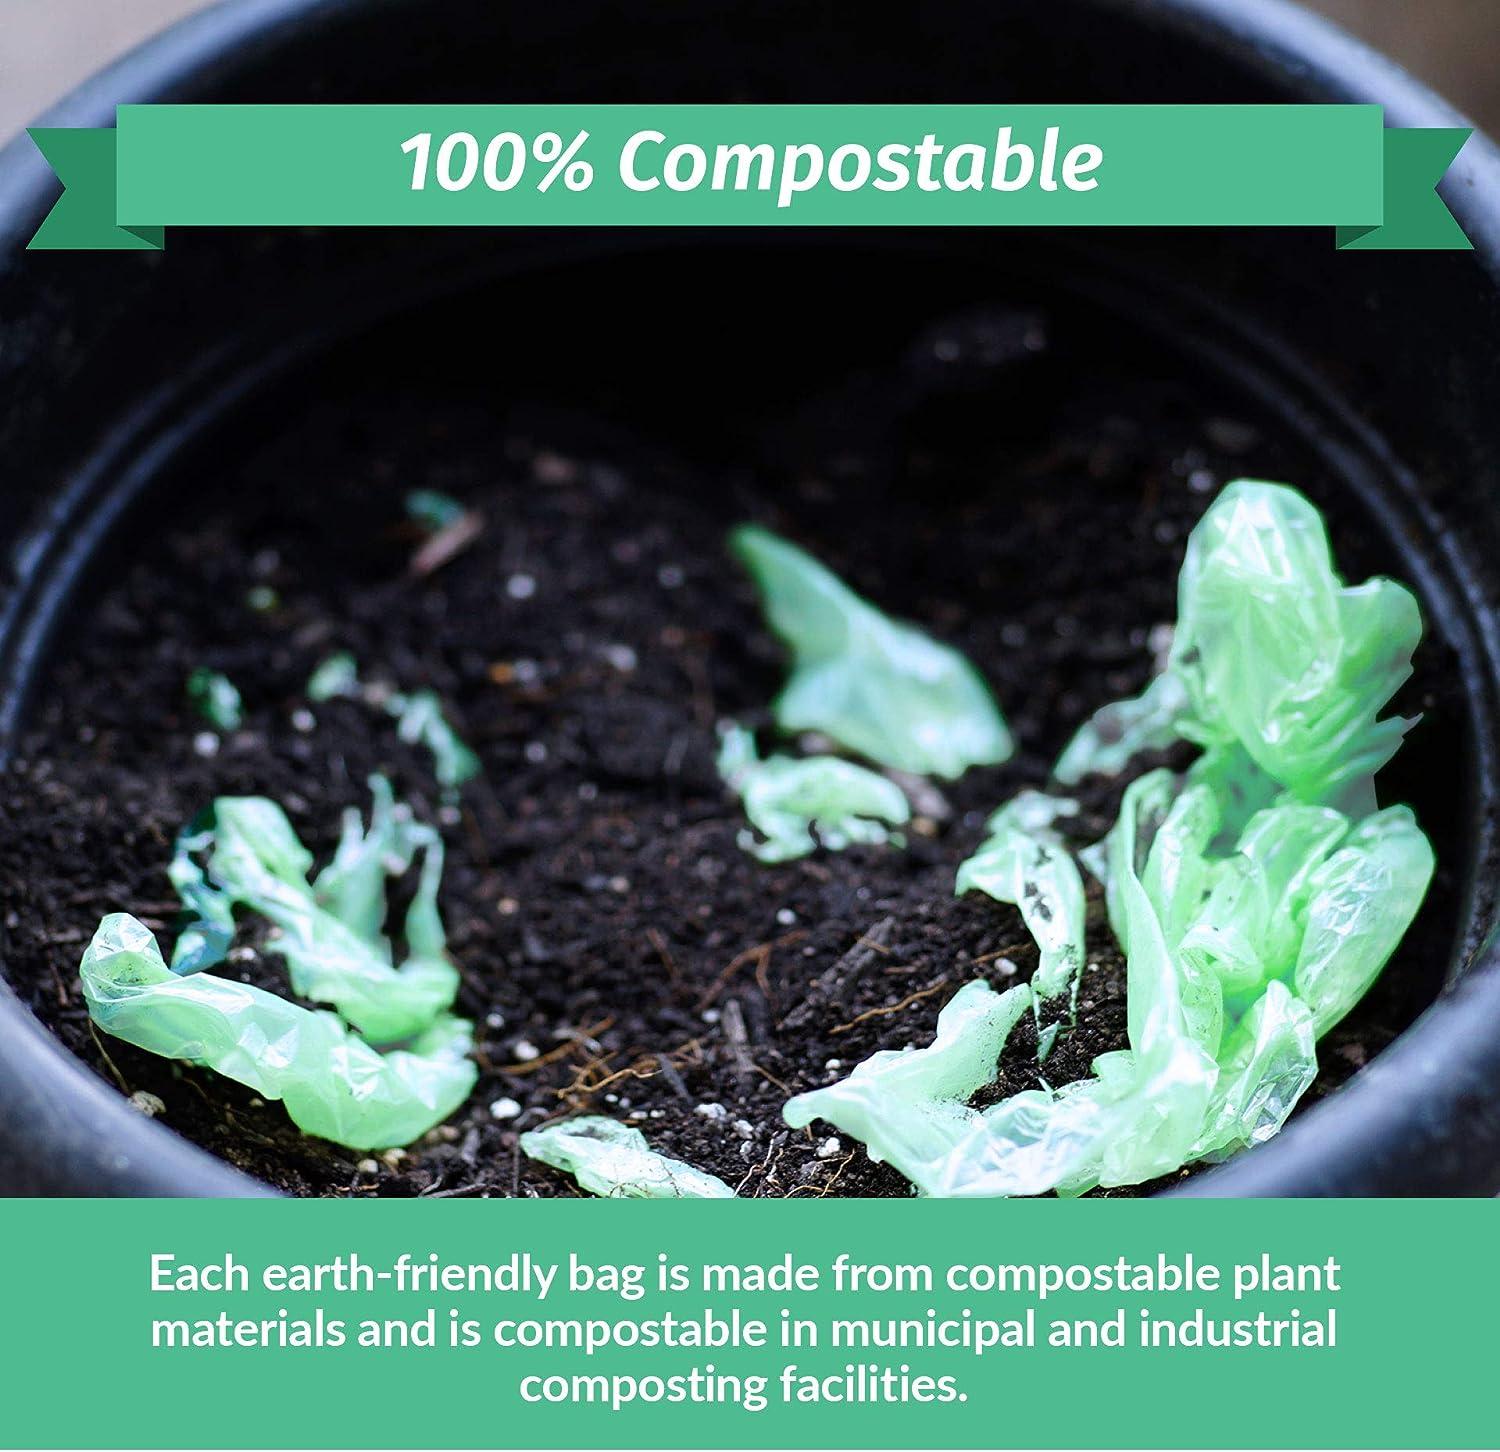 Reli. Eco-Friendly Compostable 13 Gallon Biodegradable Trash Bags (150 Bags)  13 Gallon Compostable Trash Bags (Green) 